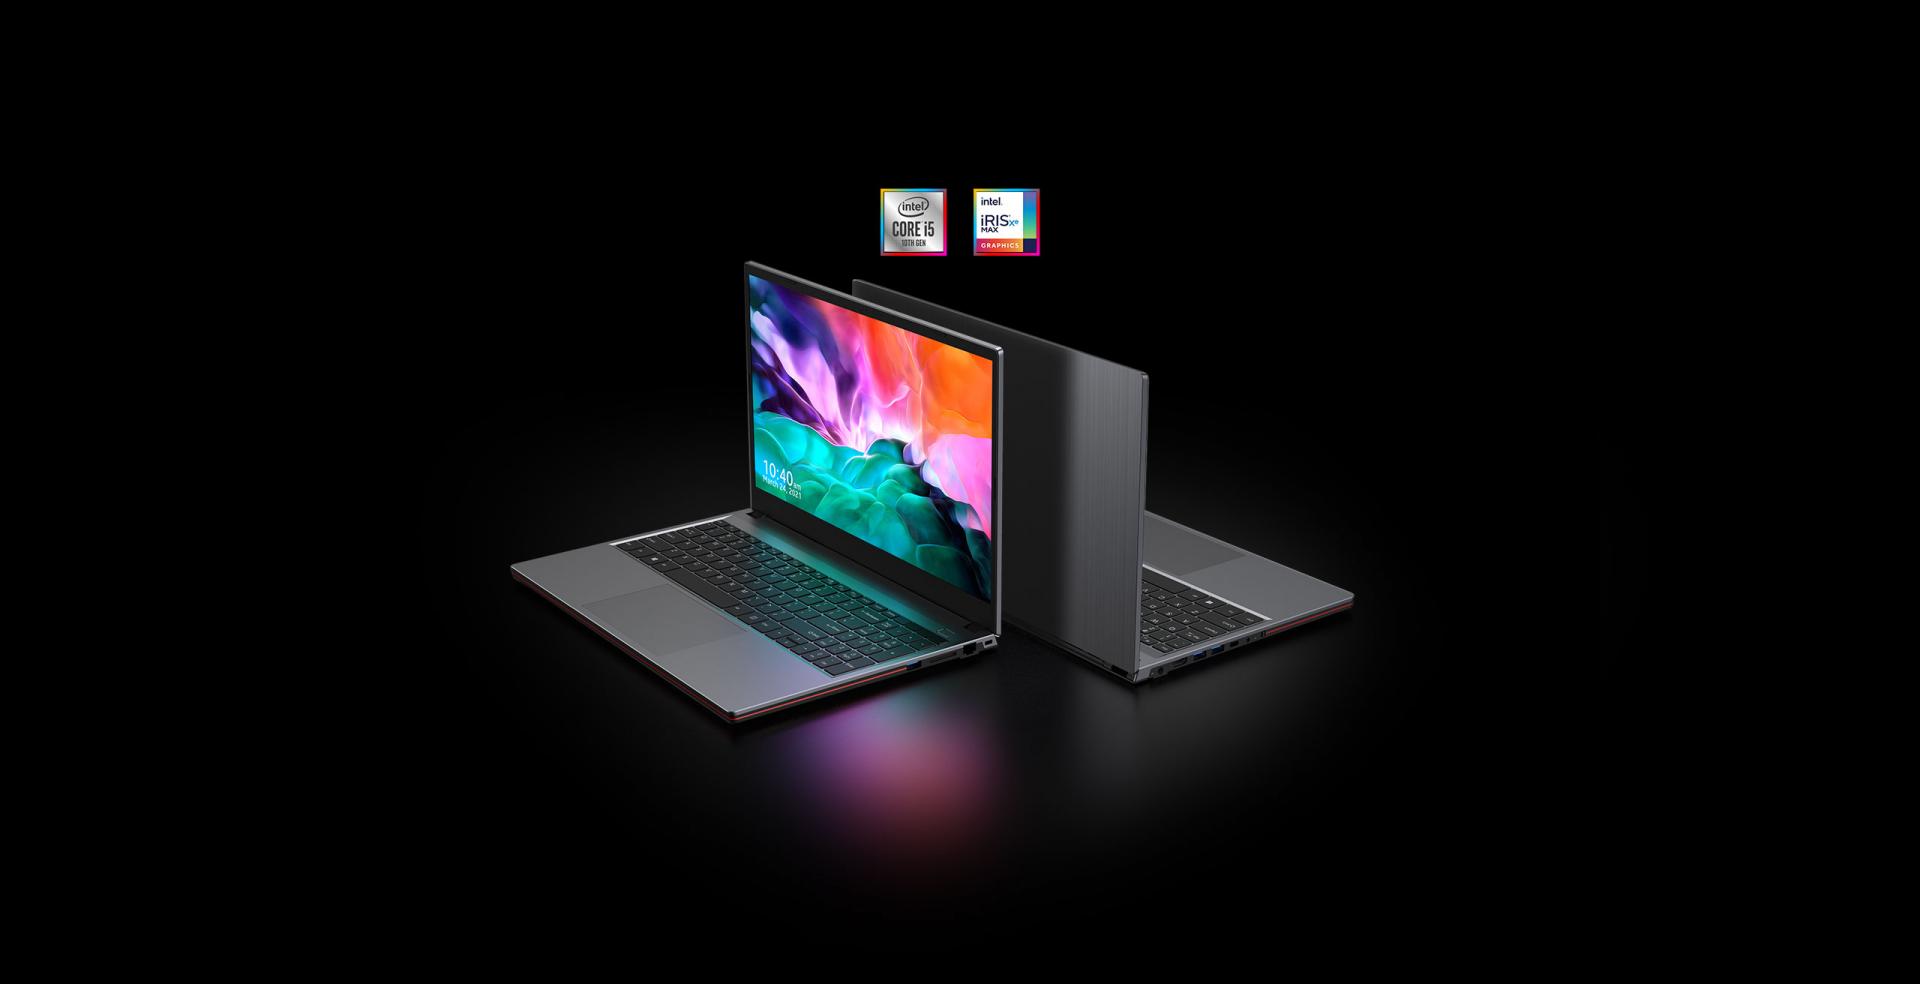 Chuwi готовит интересный ноутбук CoreBook XE за 600 долларов